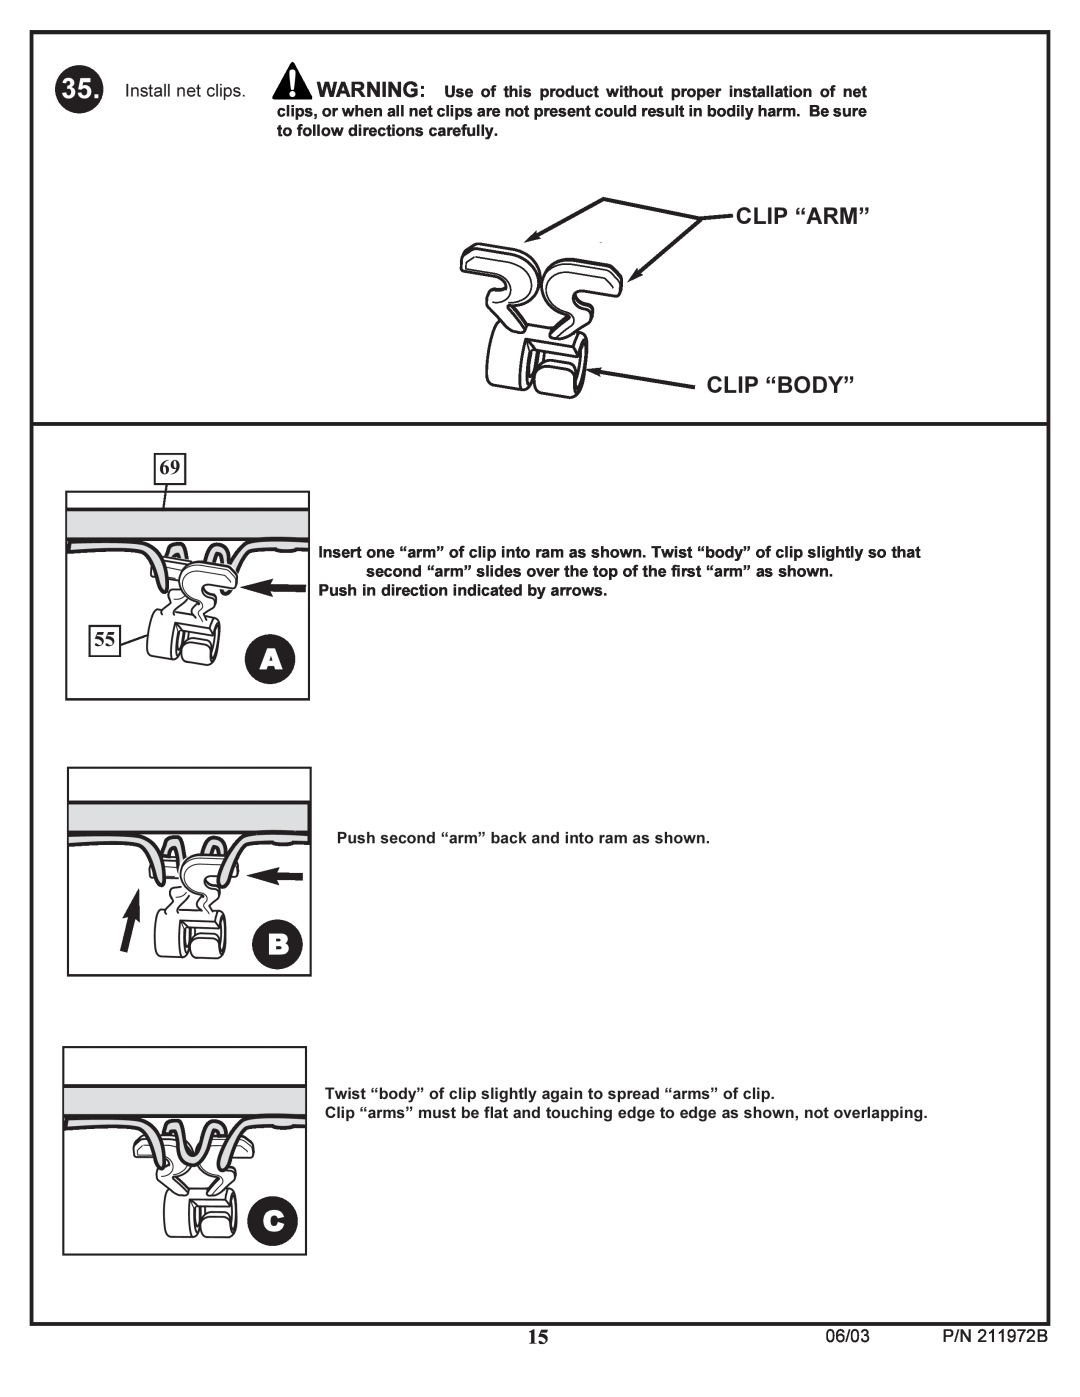 Huffy manual Clip “Arm” Clip “Body”, 06/03, P/N 211972B 